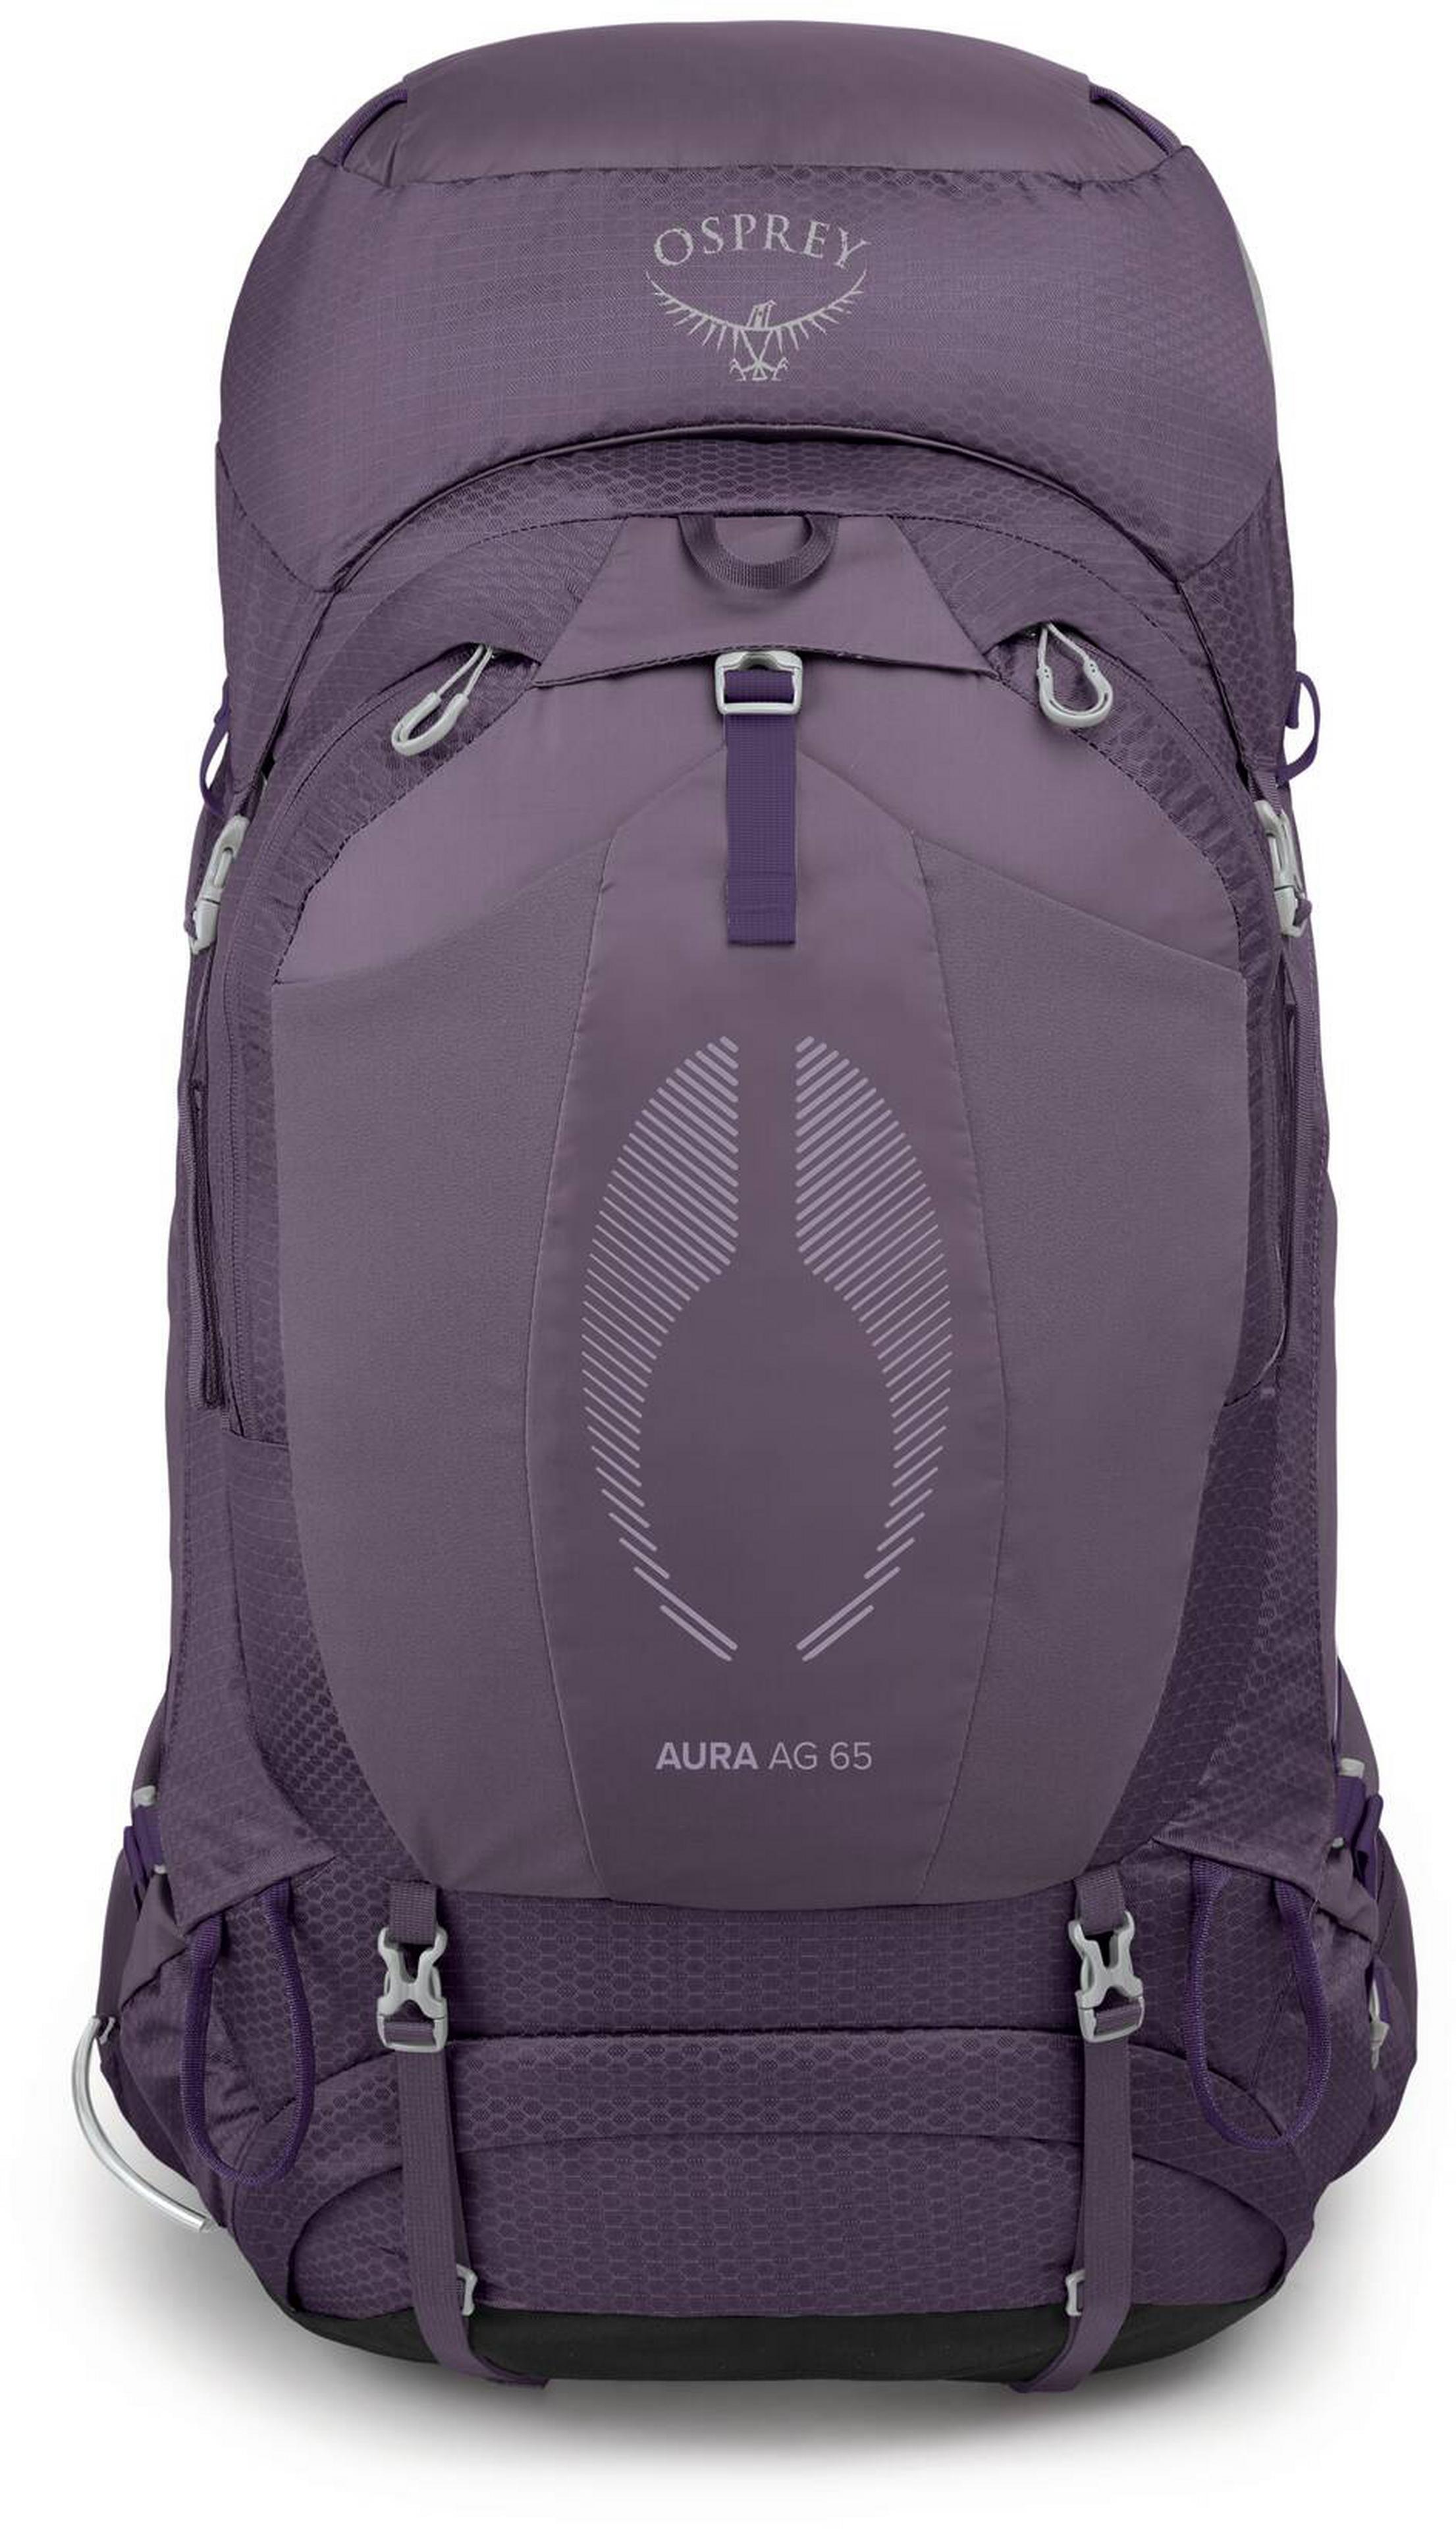 Osprey Aura AG 65 Hiking Backpack